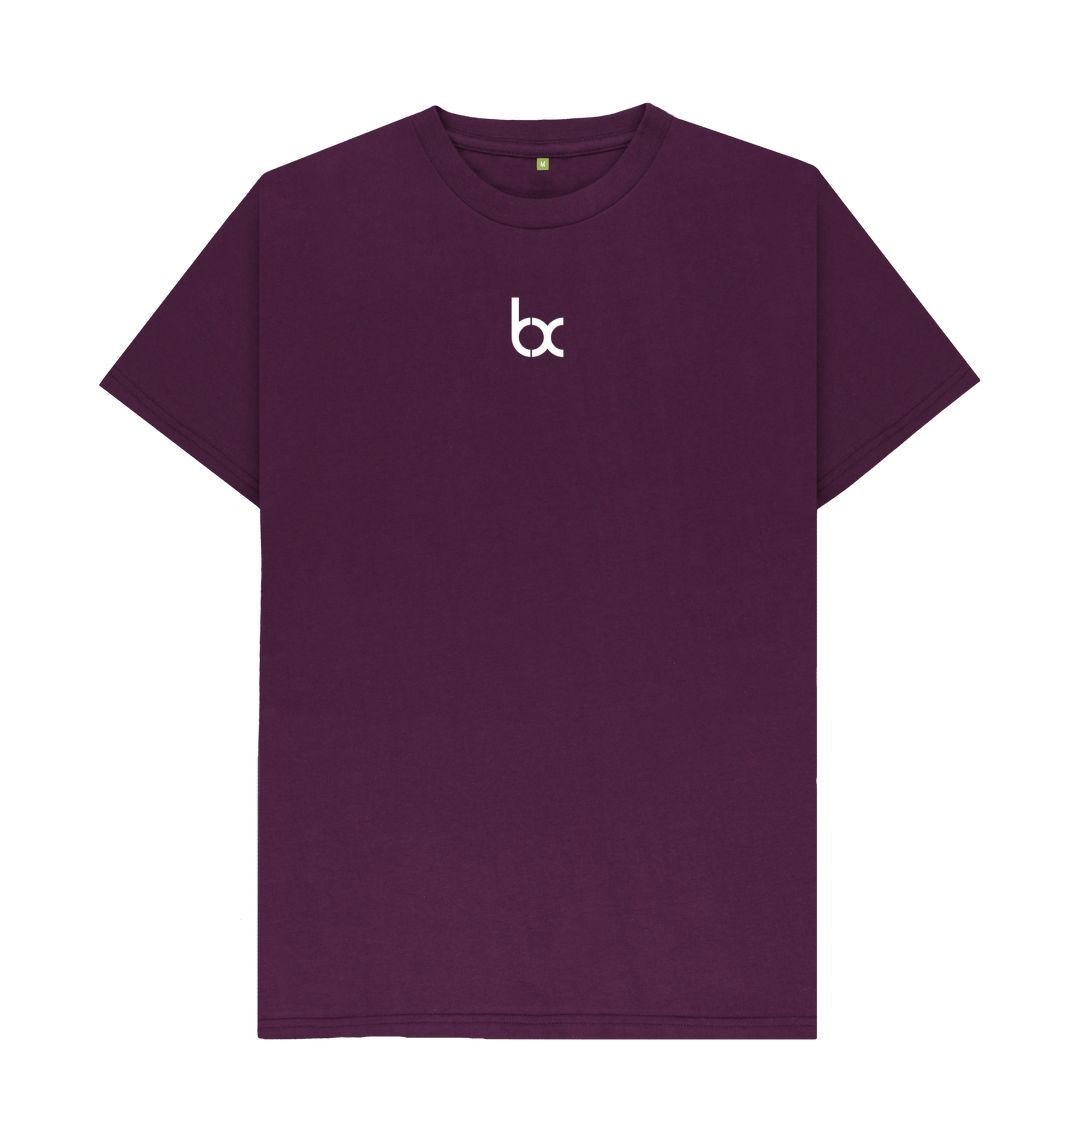 Purple BX Standard Tee with white logo